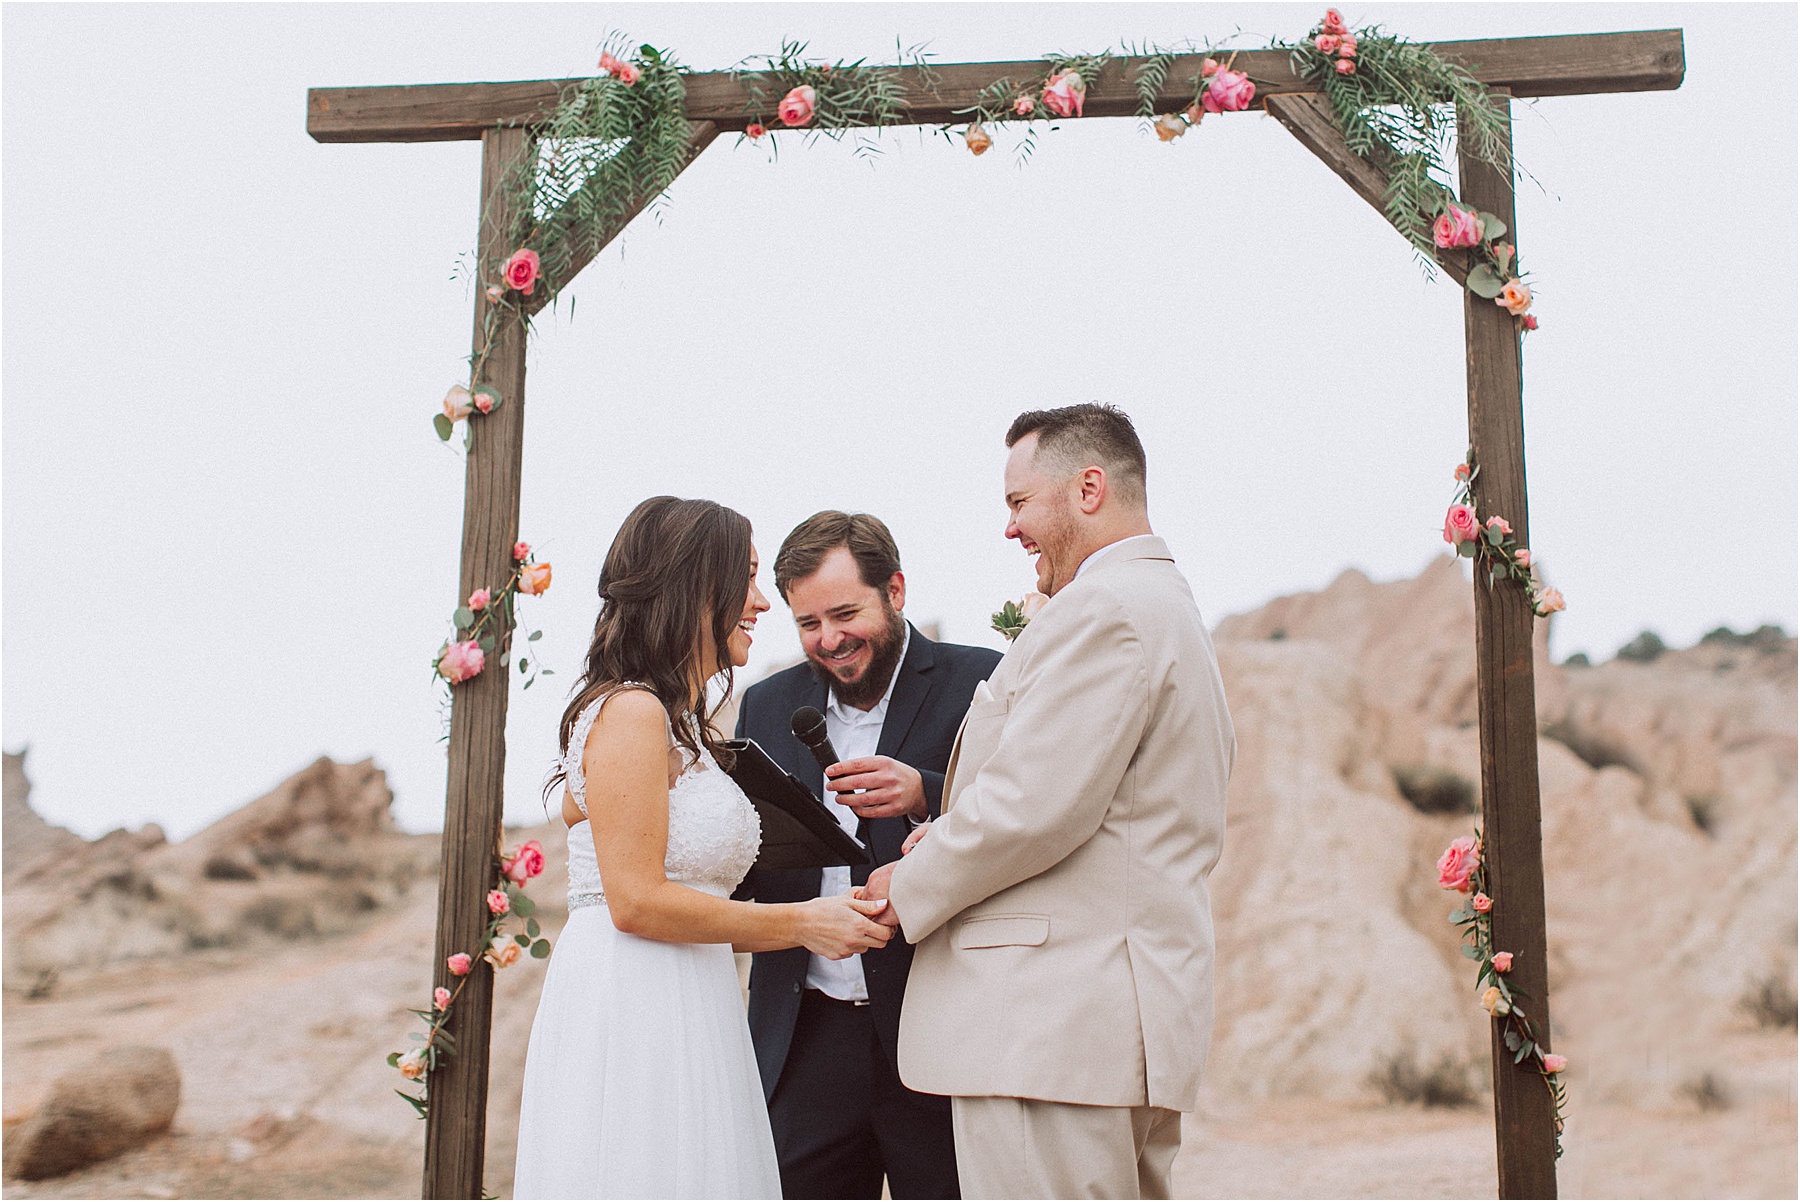 Vasquez Rocks Intimate Wedding & Elopement Photography - Vow exchange